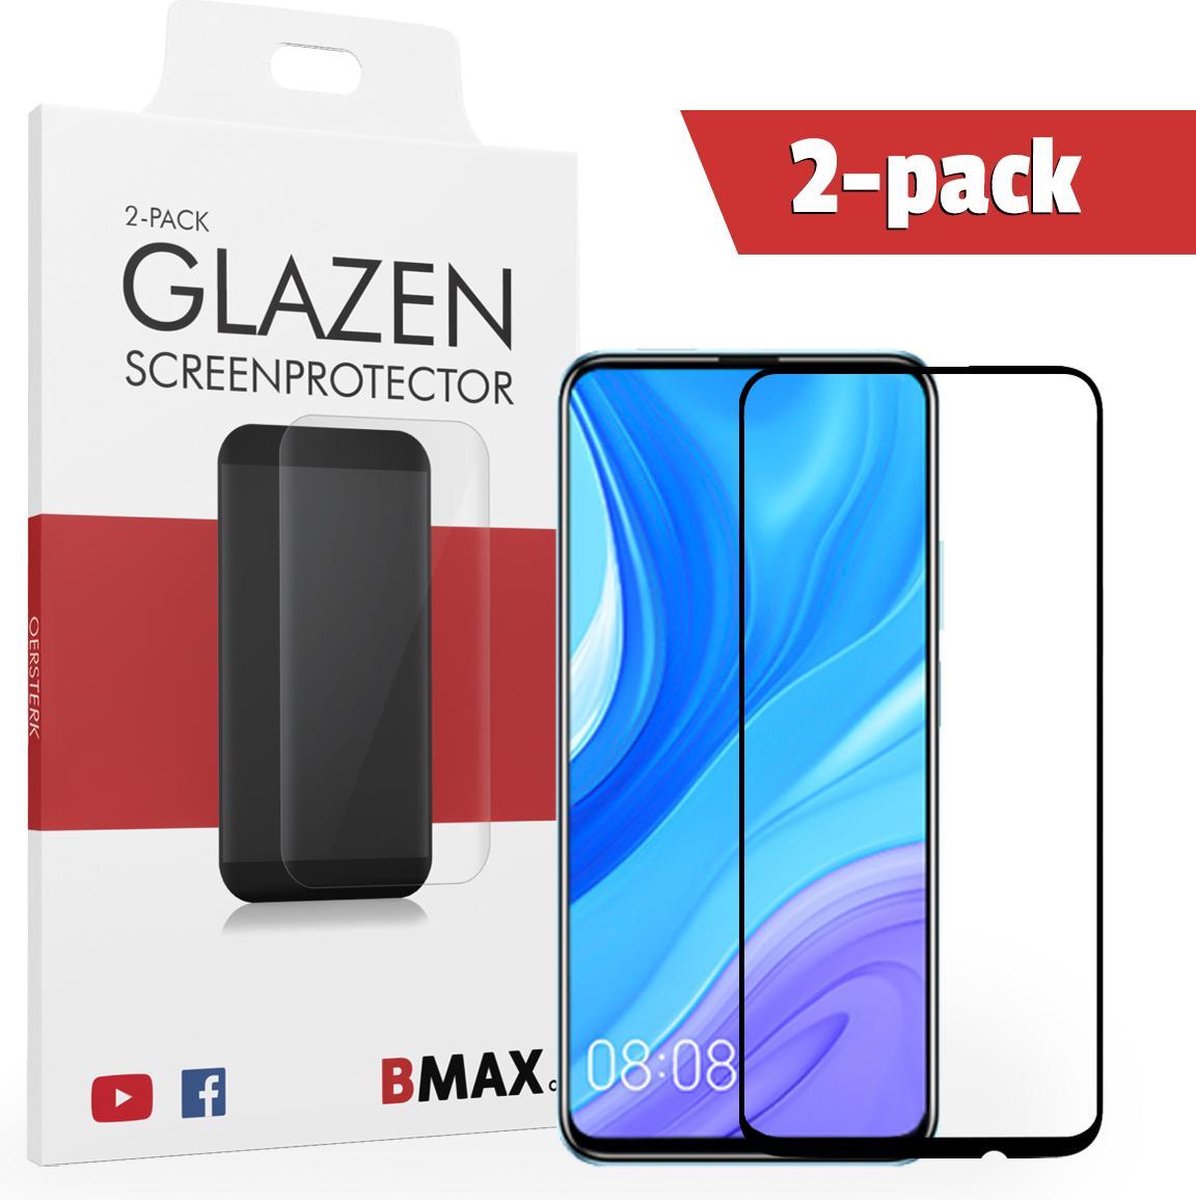 2-pack Bmax Huawei Y9s Screenprotector - Glass - Full Cover 2.5d - Black